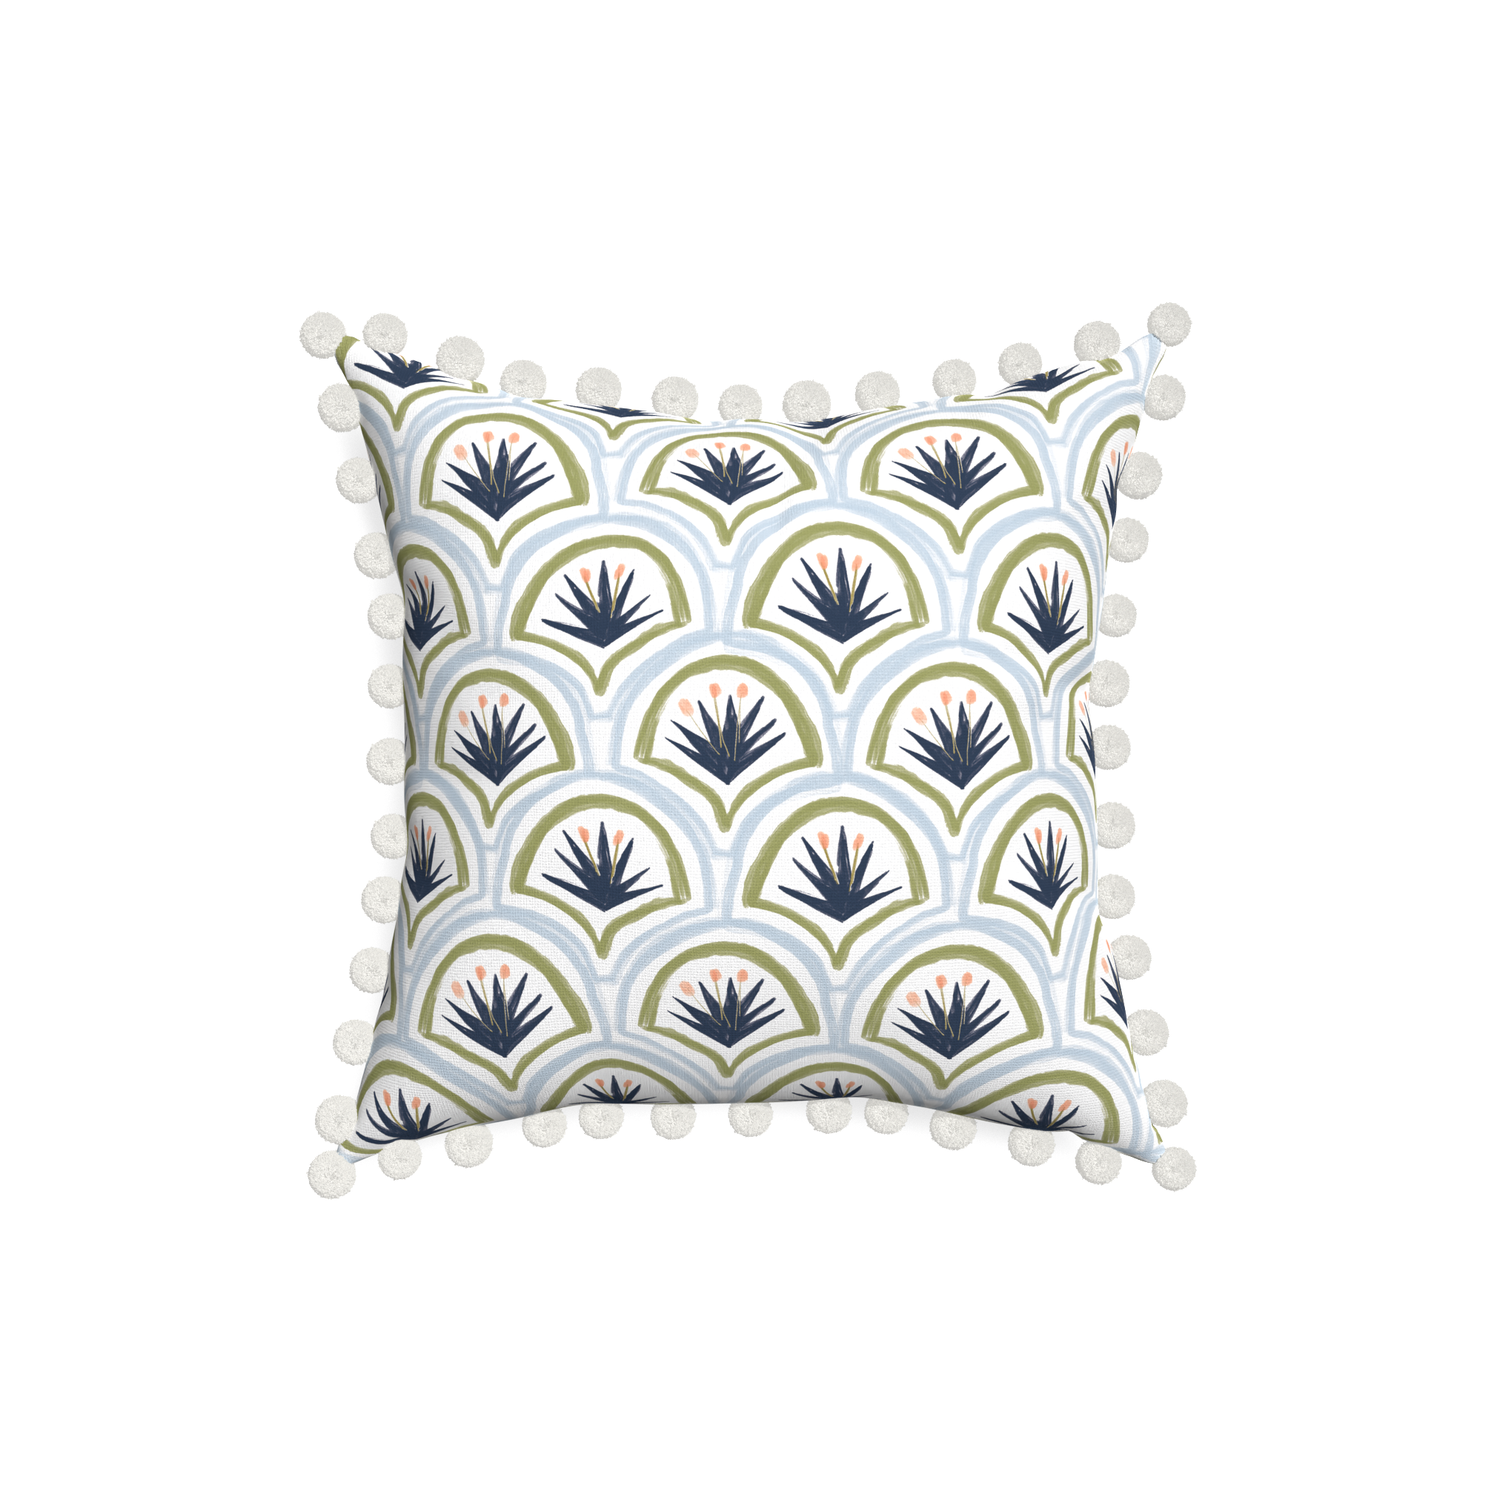 18-square thatcher midnight custom art deco palm patternpillow with snow pom pom on white background